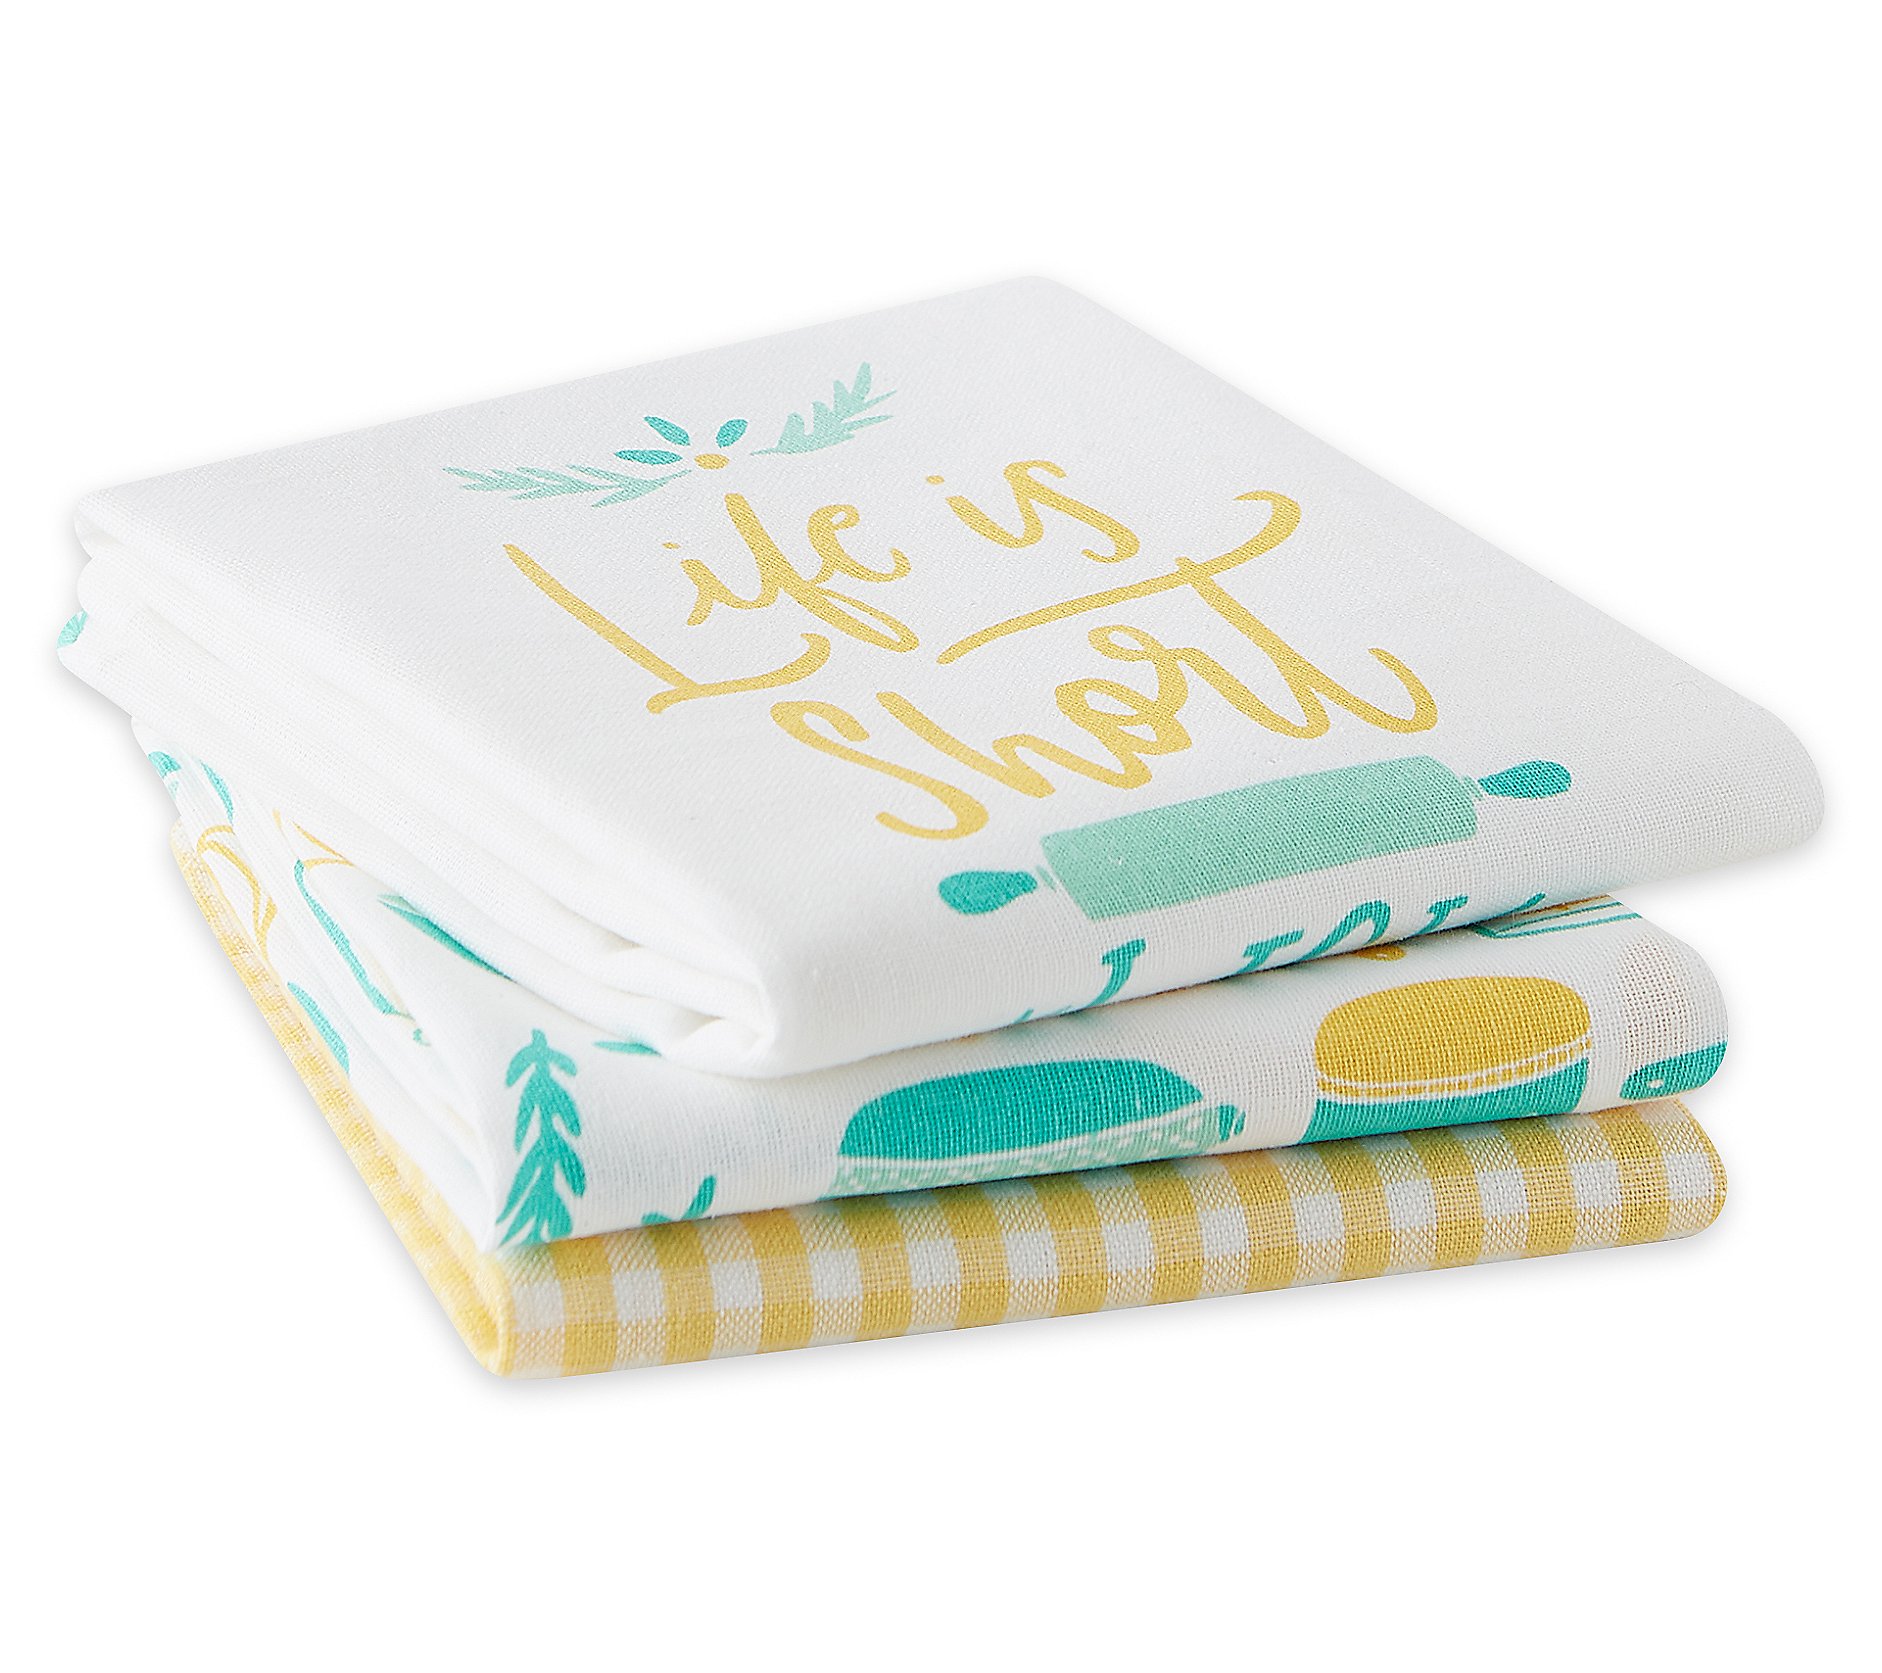 Design Imports Set of 3 Life is Short Kitchen Towels